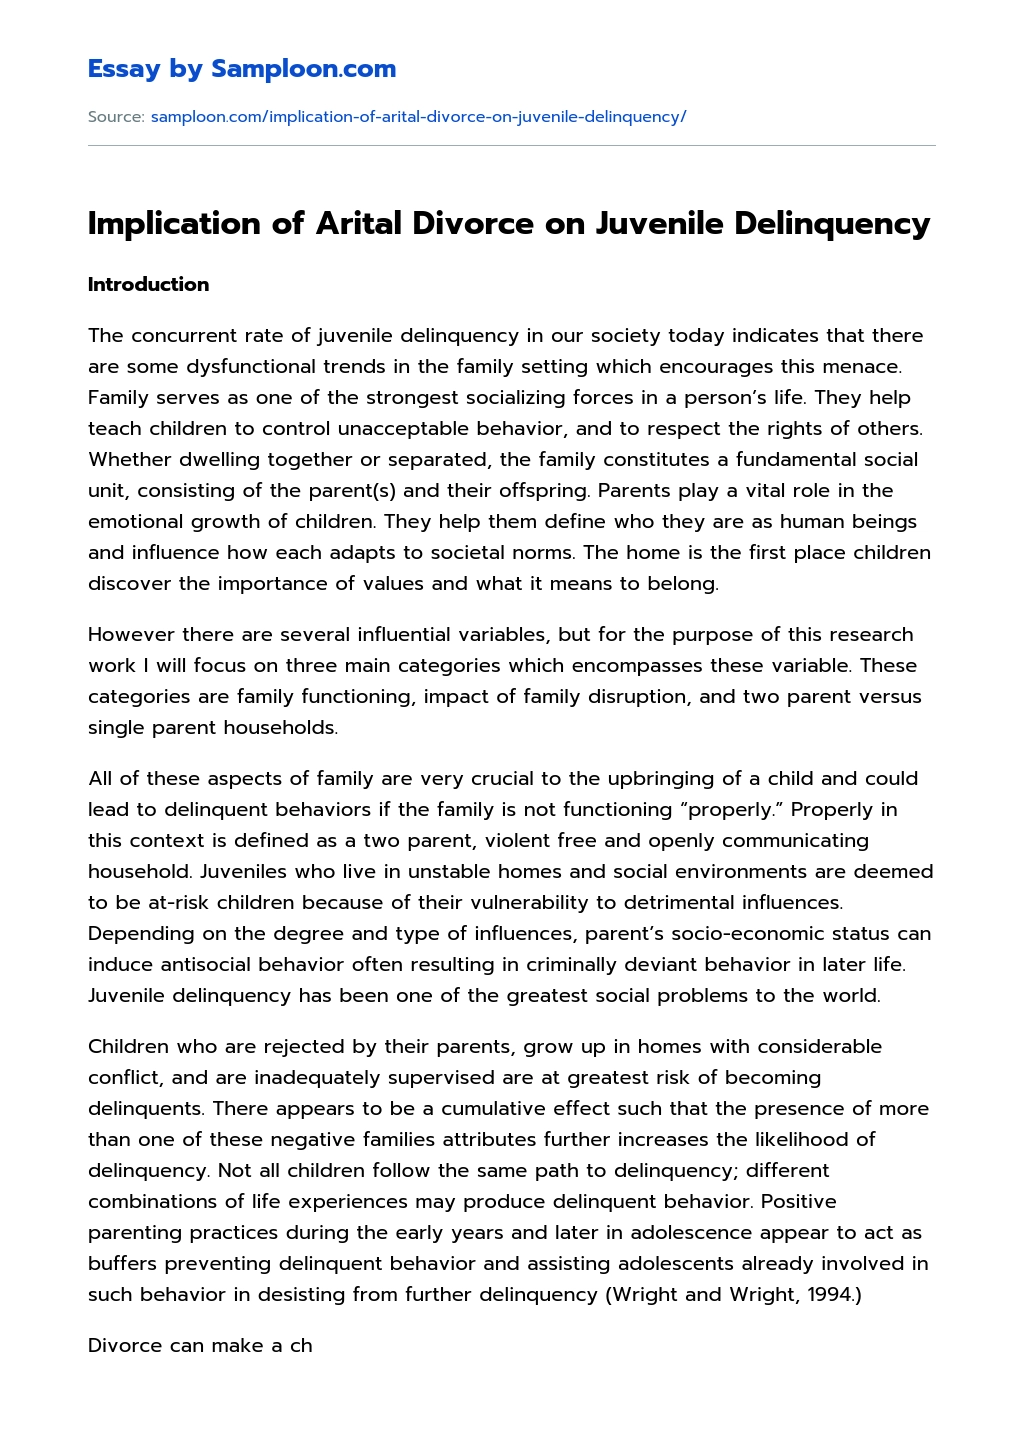 Implication of Arital Divorce on Juvenile Delinquency essay